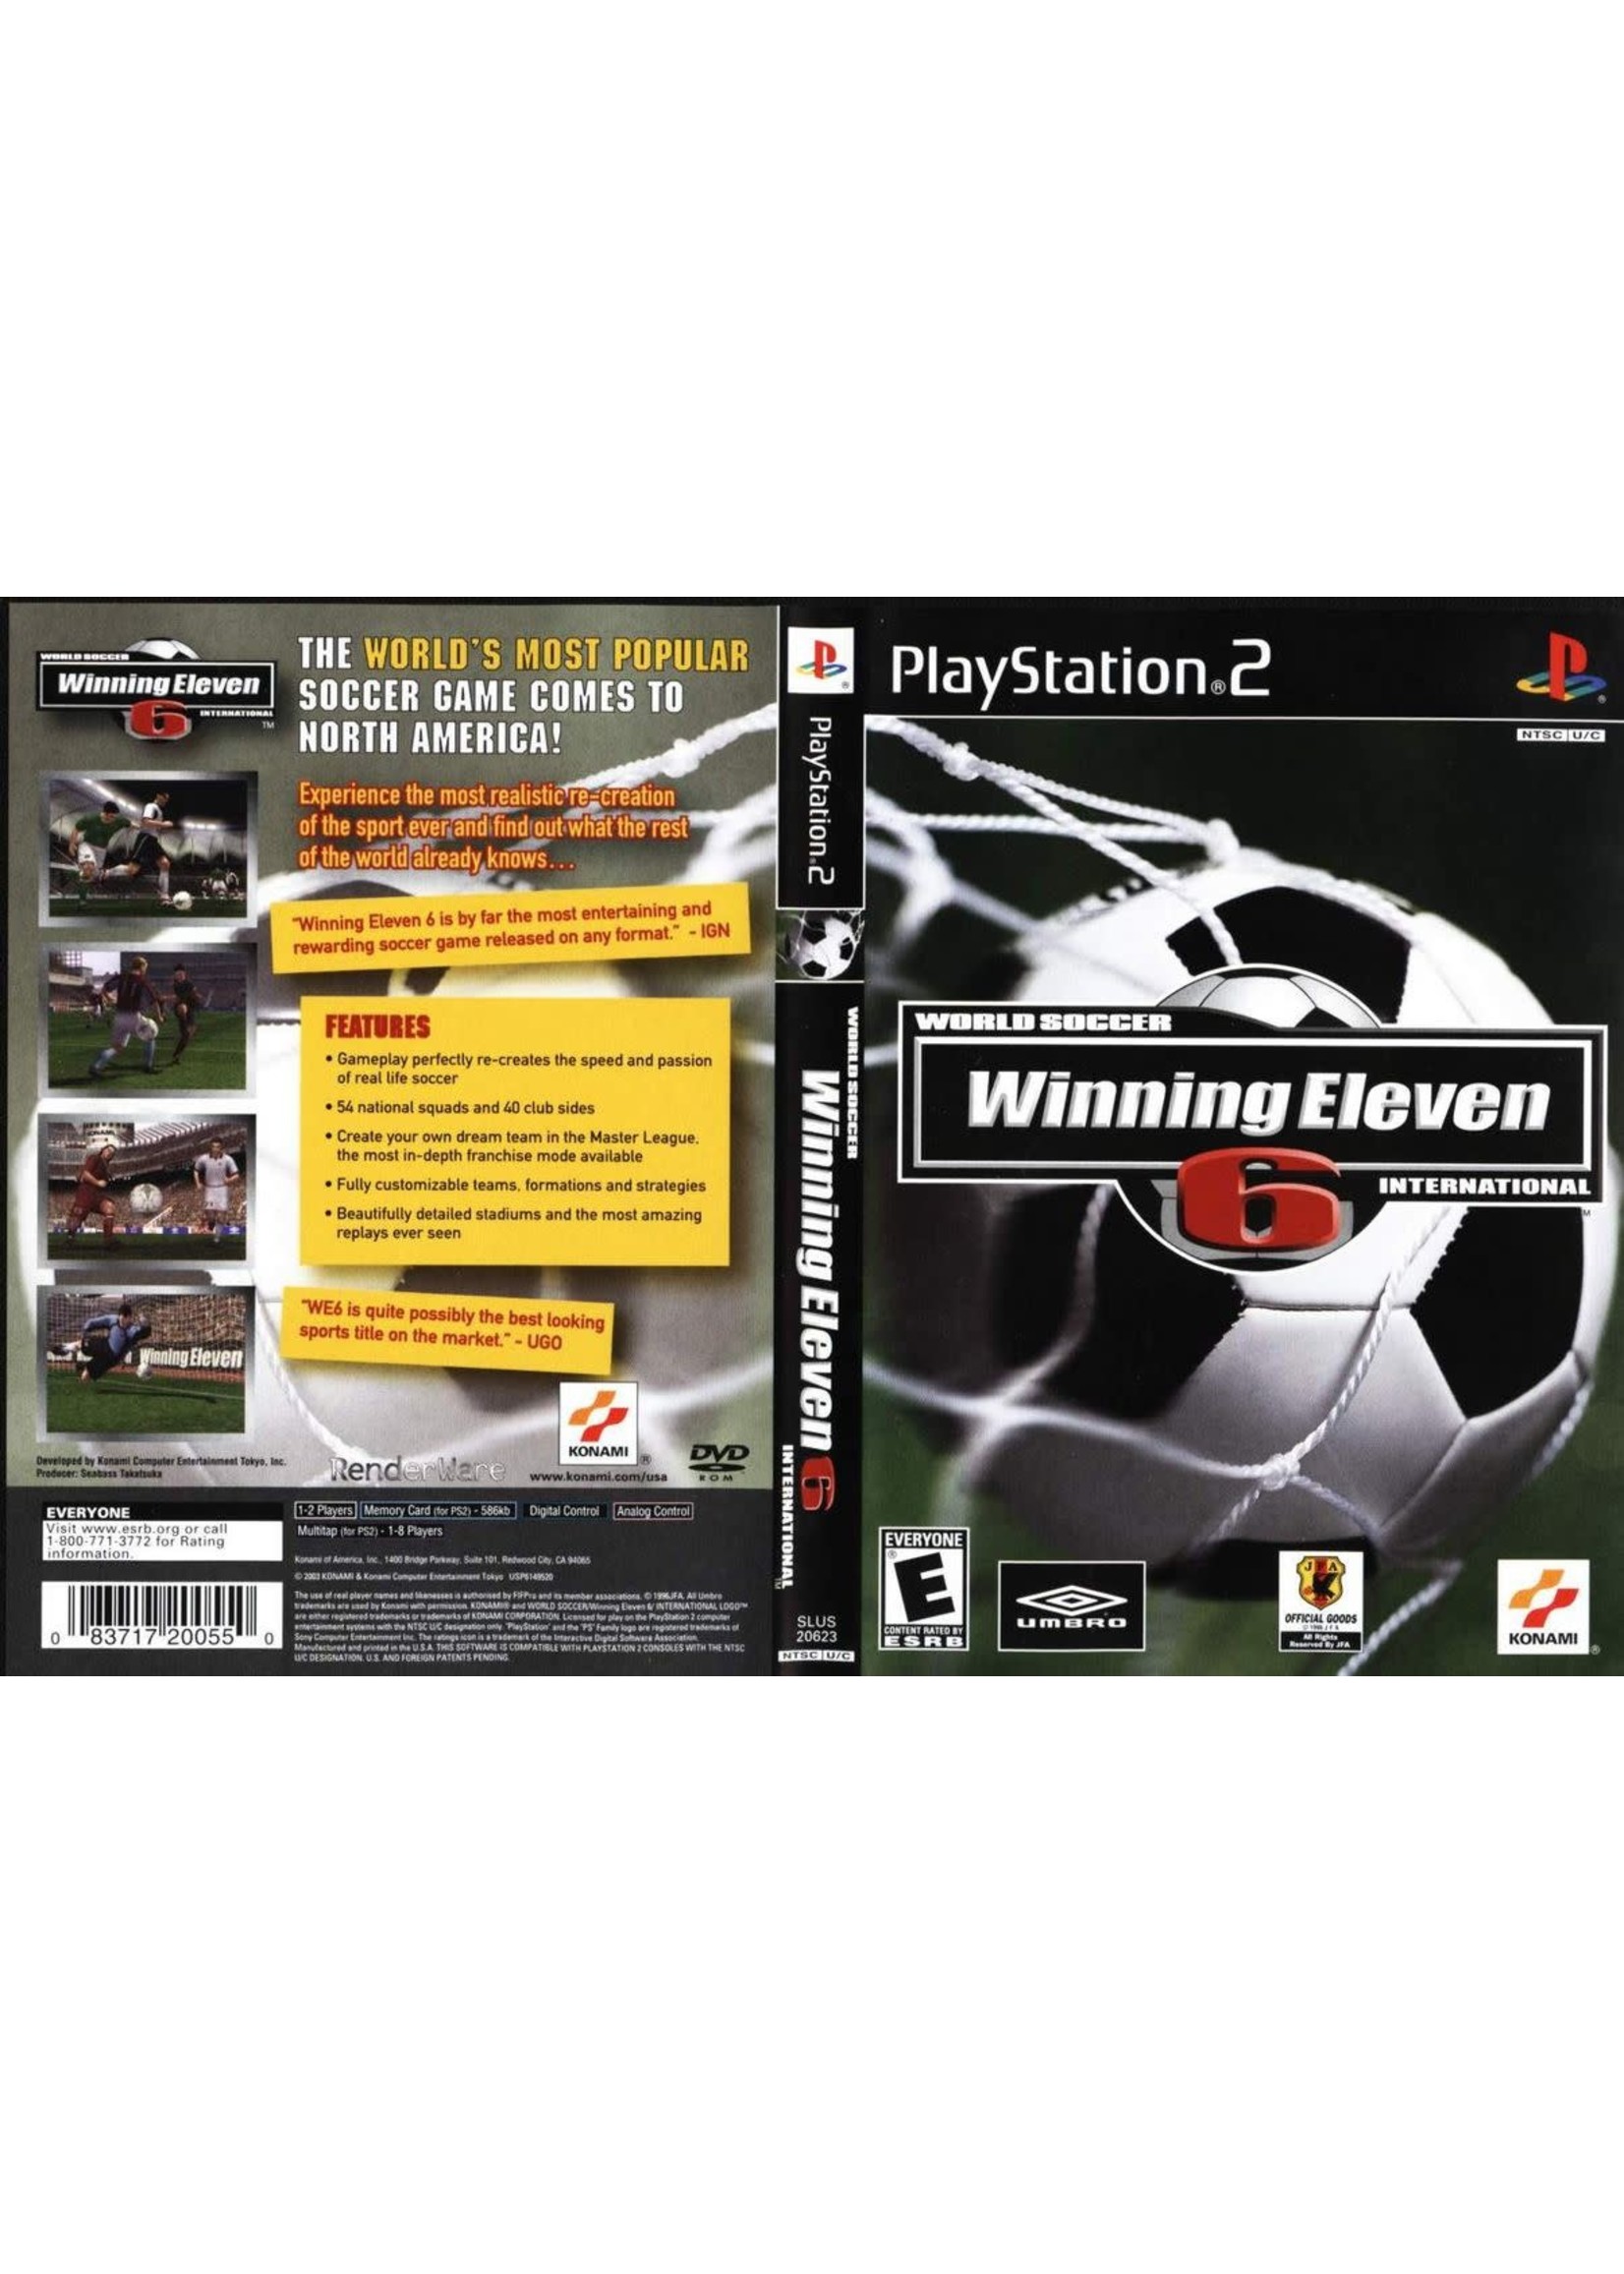 Sony Playstation 2 (PS2) Winning Eleven 6 International